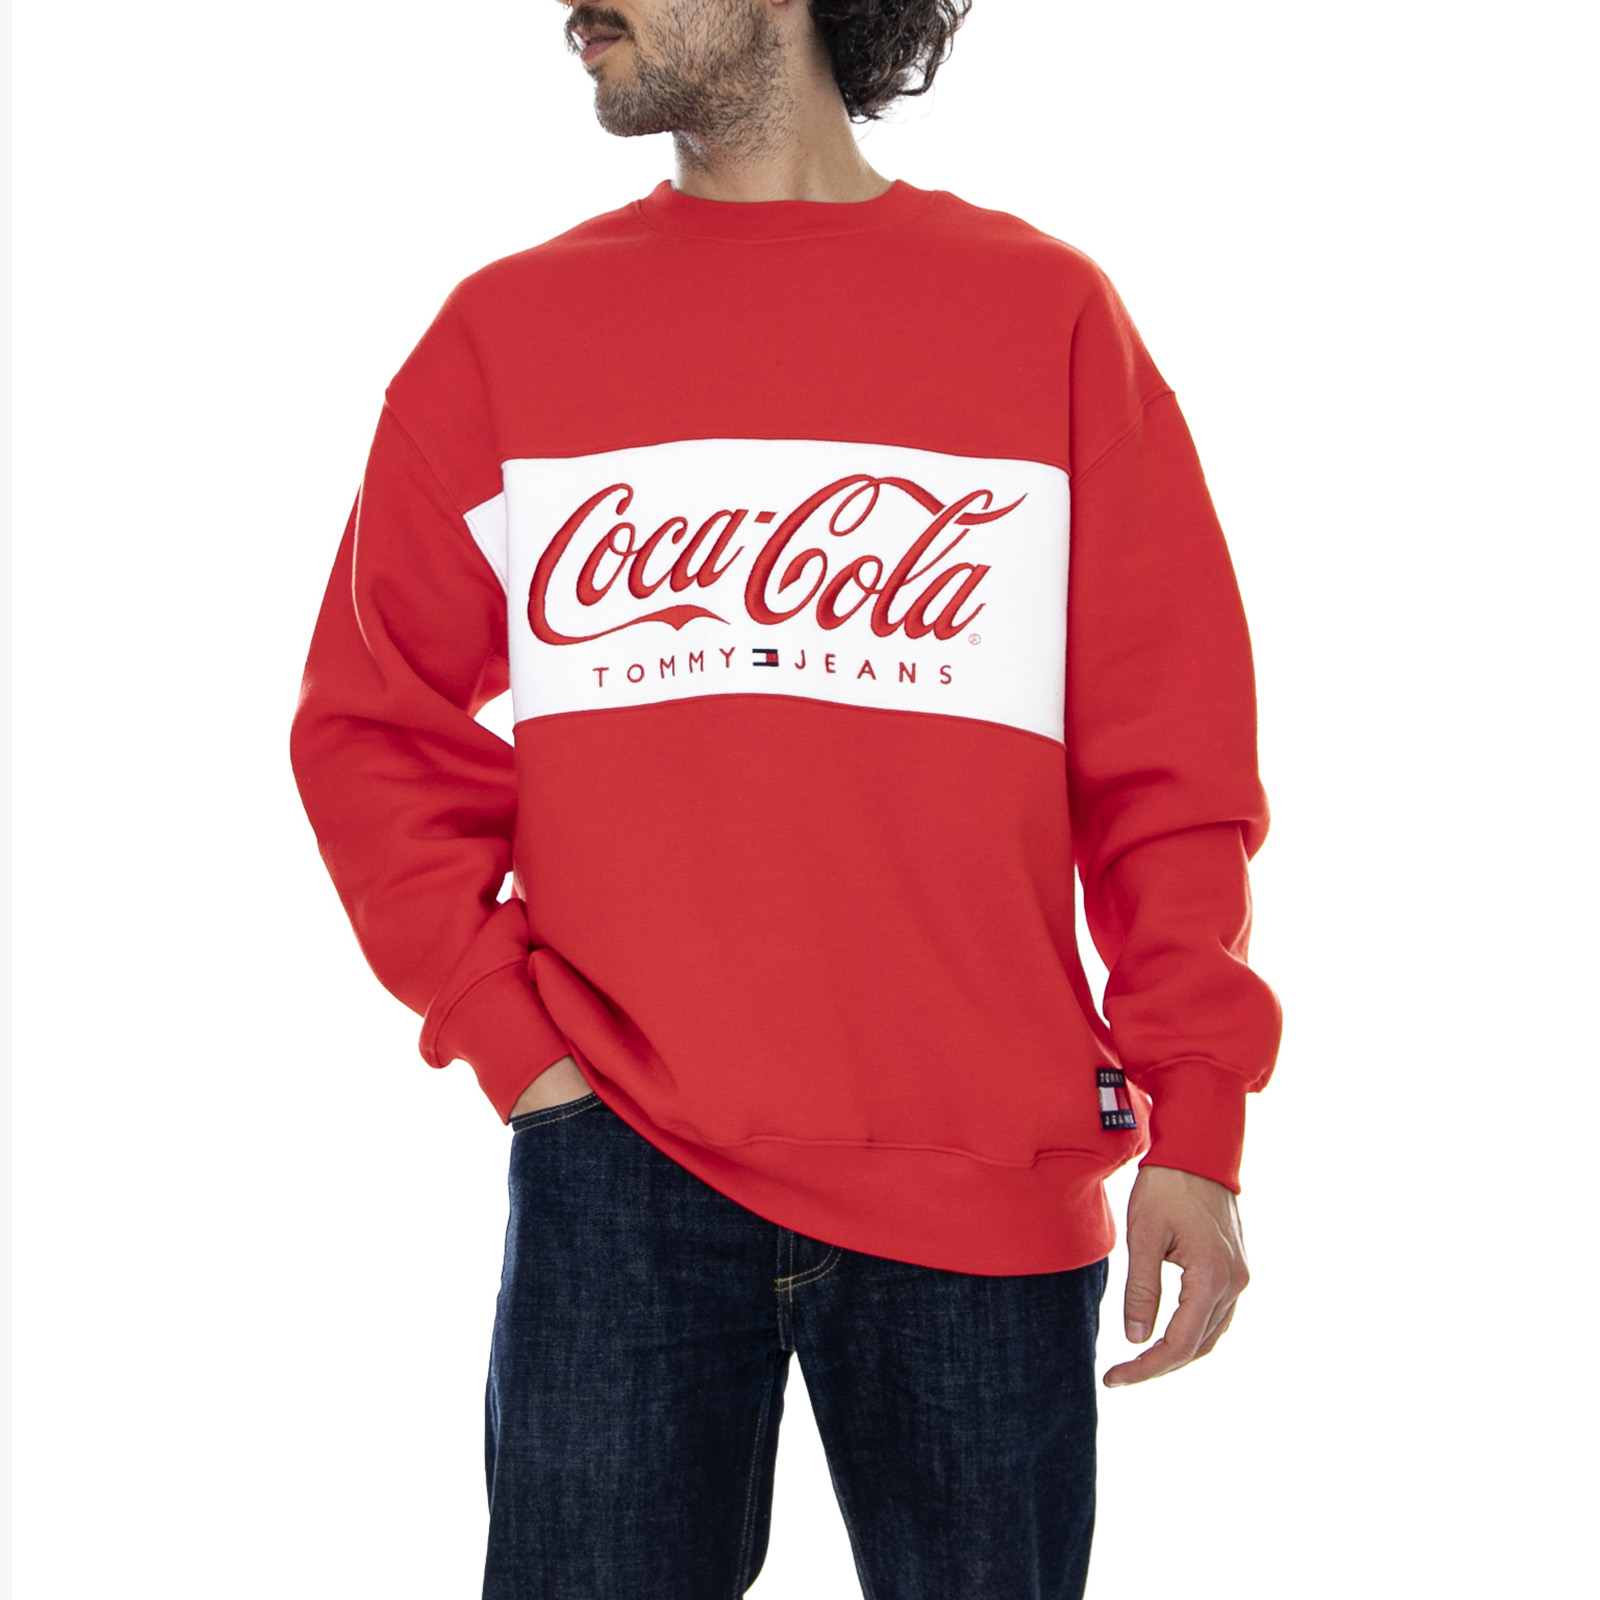 coca cola sweatshirt tommy hilfiger